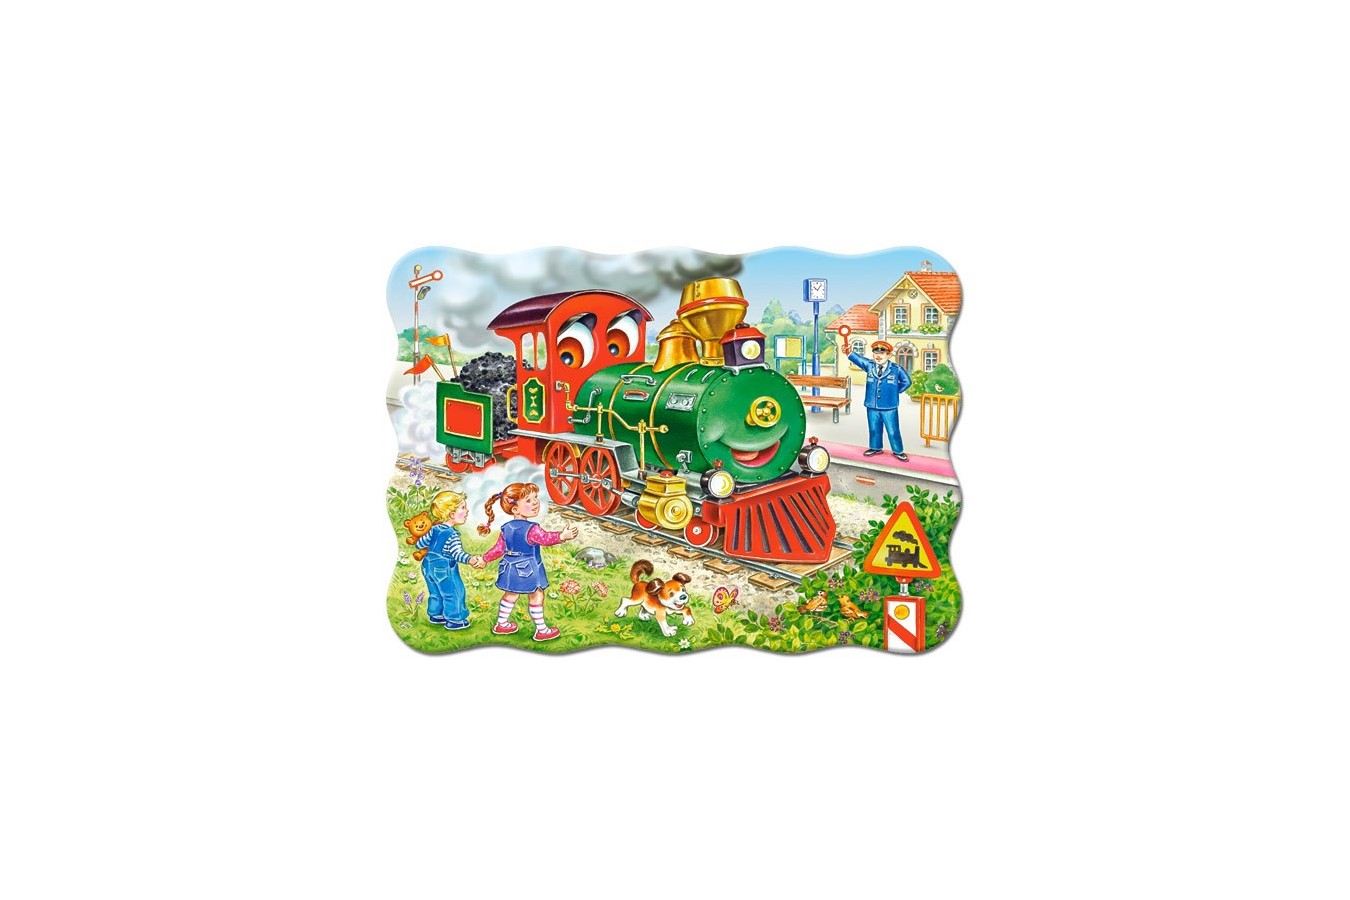 Puzzle Castorland - Green Locomotive, 30 Piese